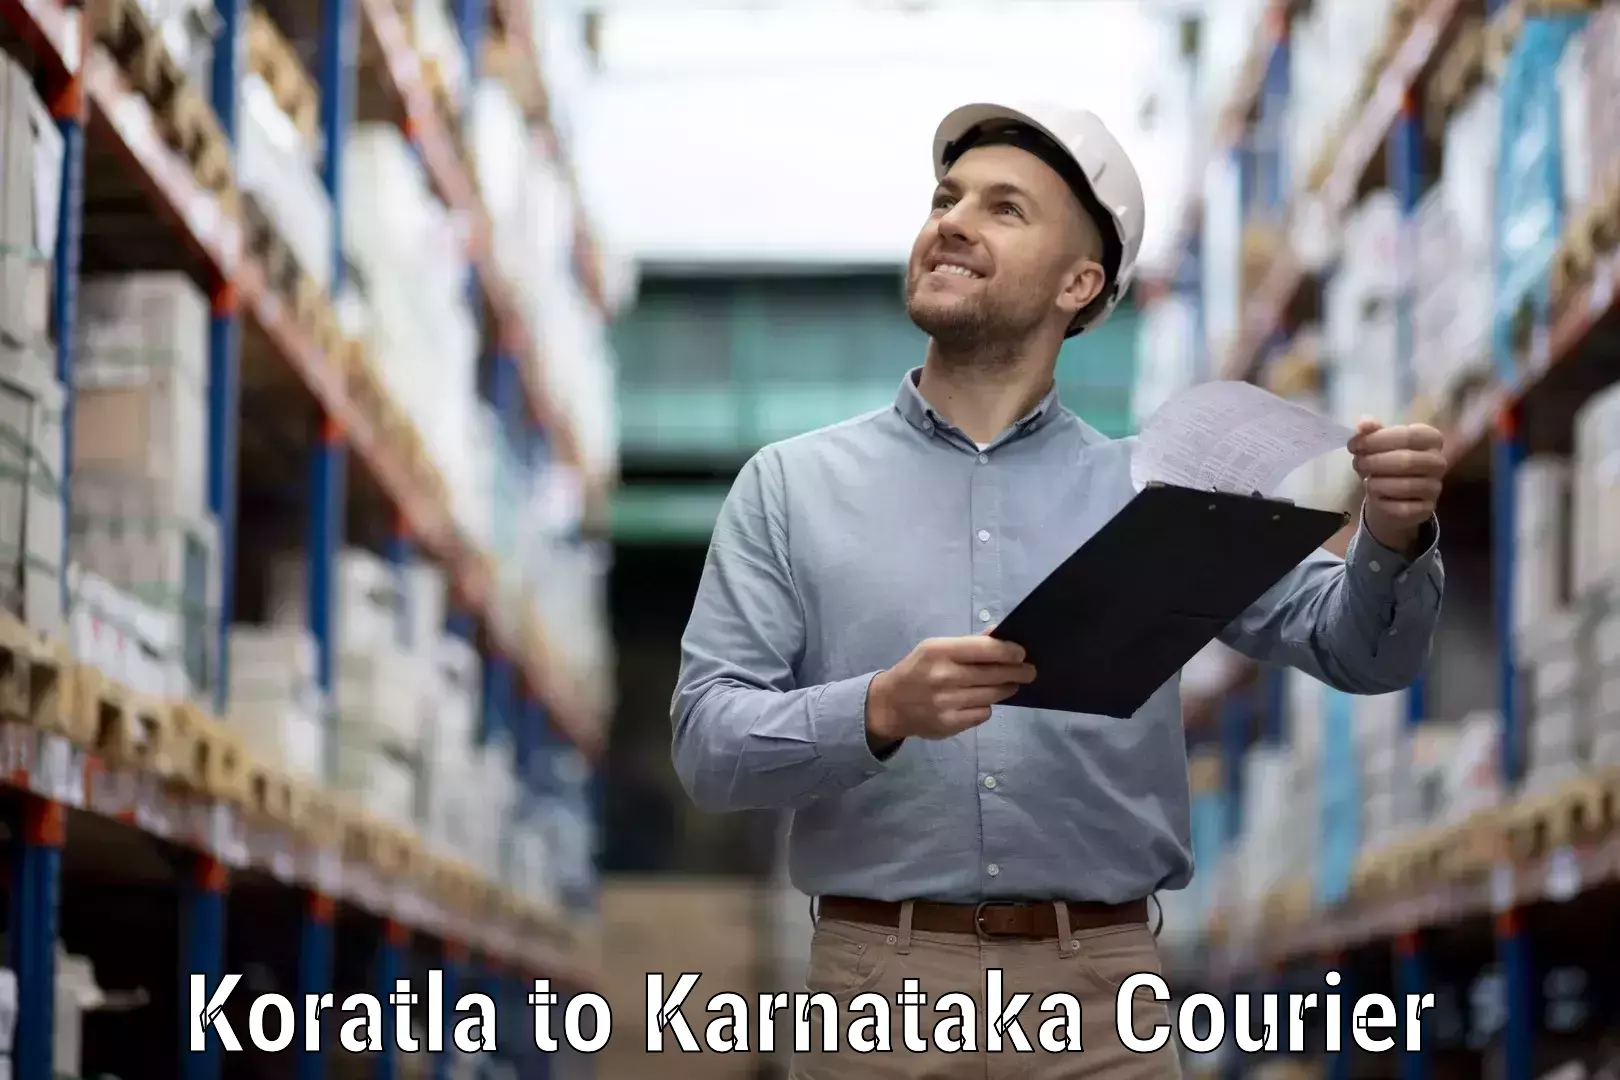 Nationwide delivery network Koratla to Kotturu